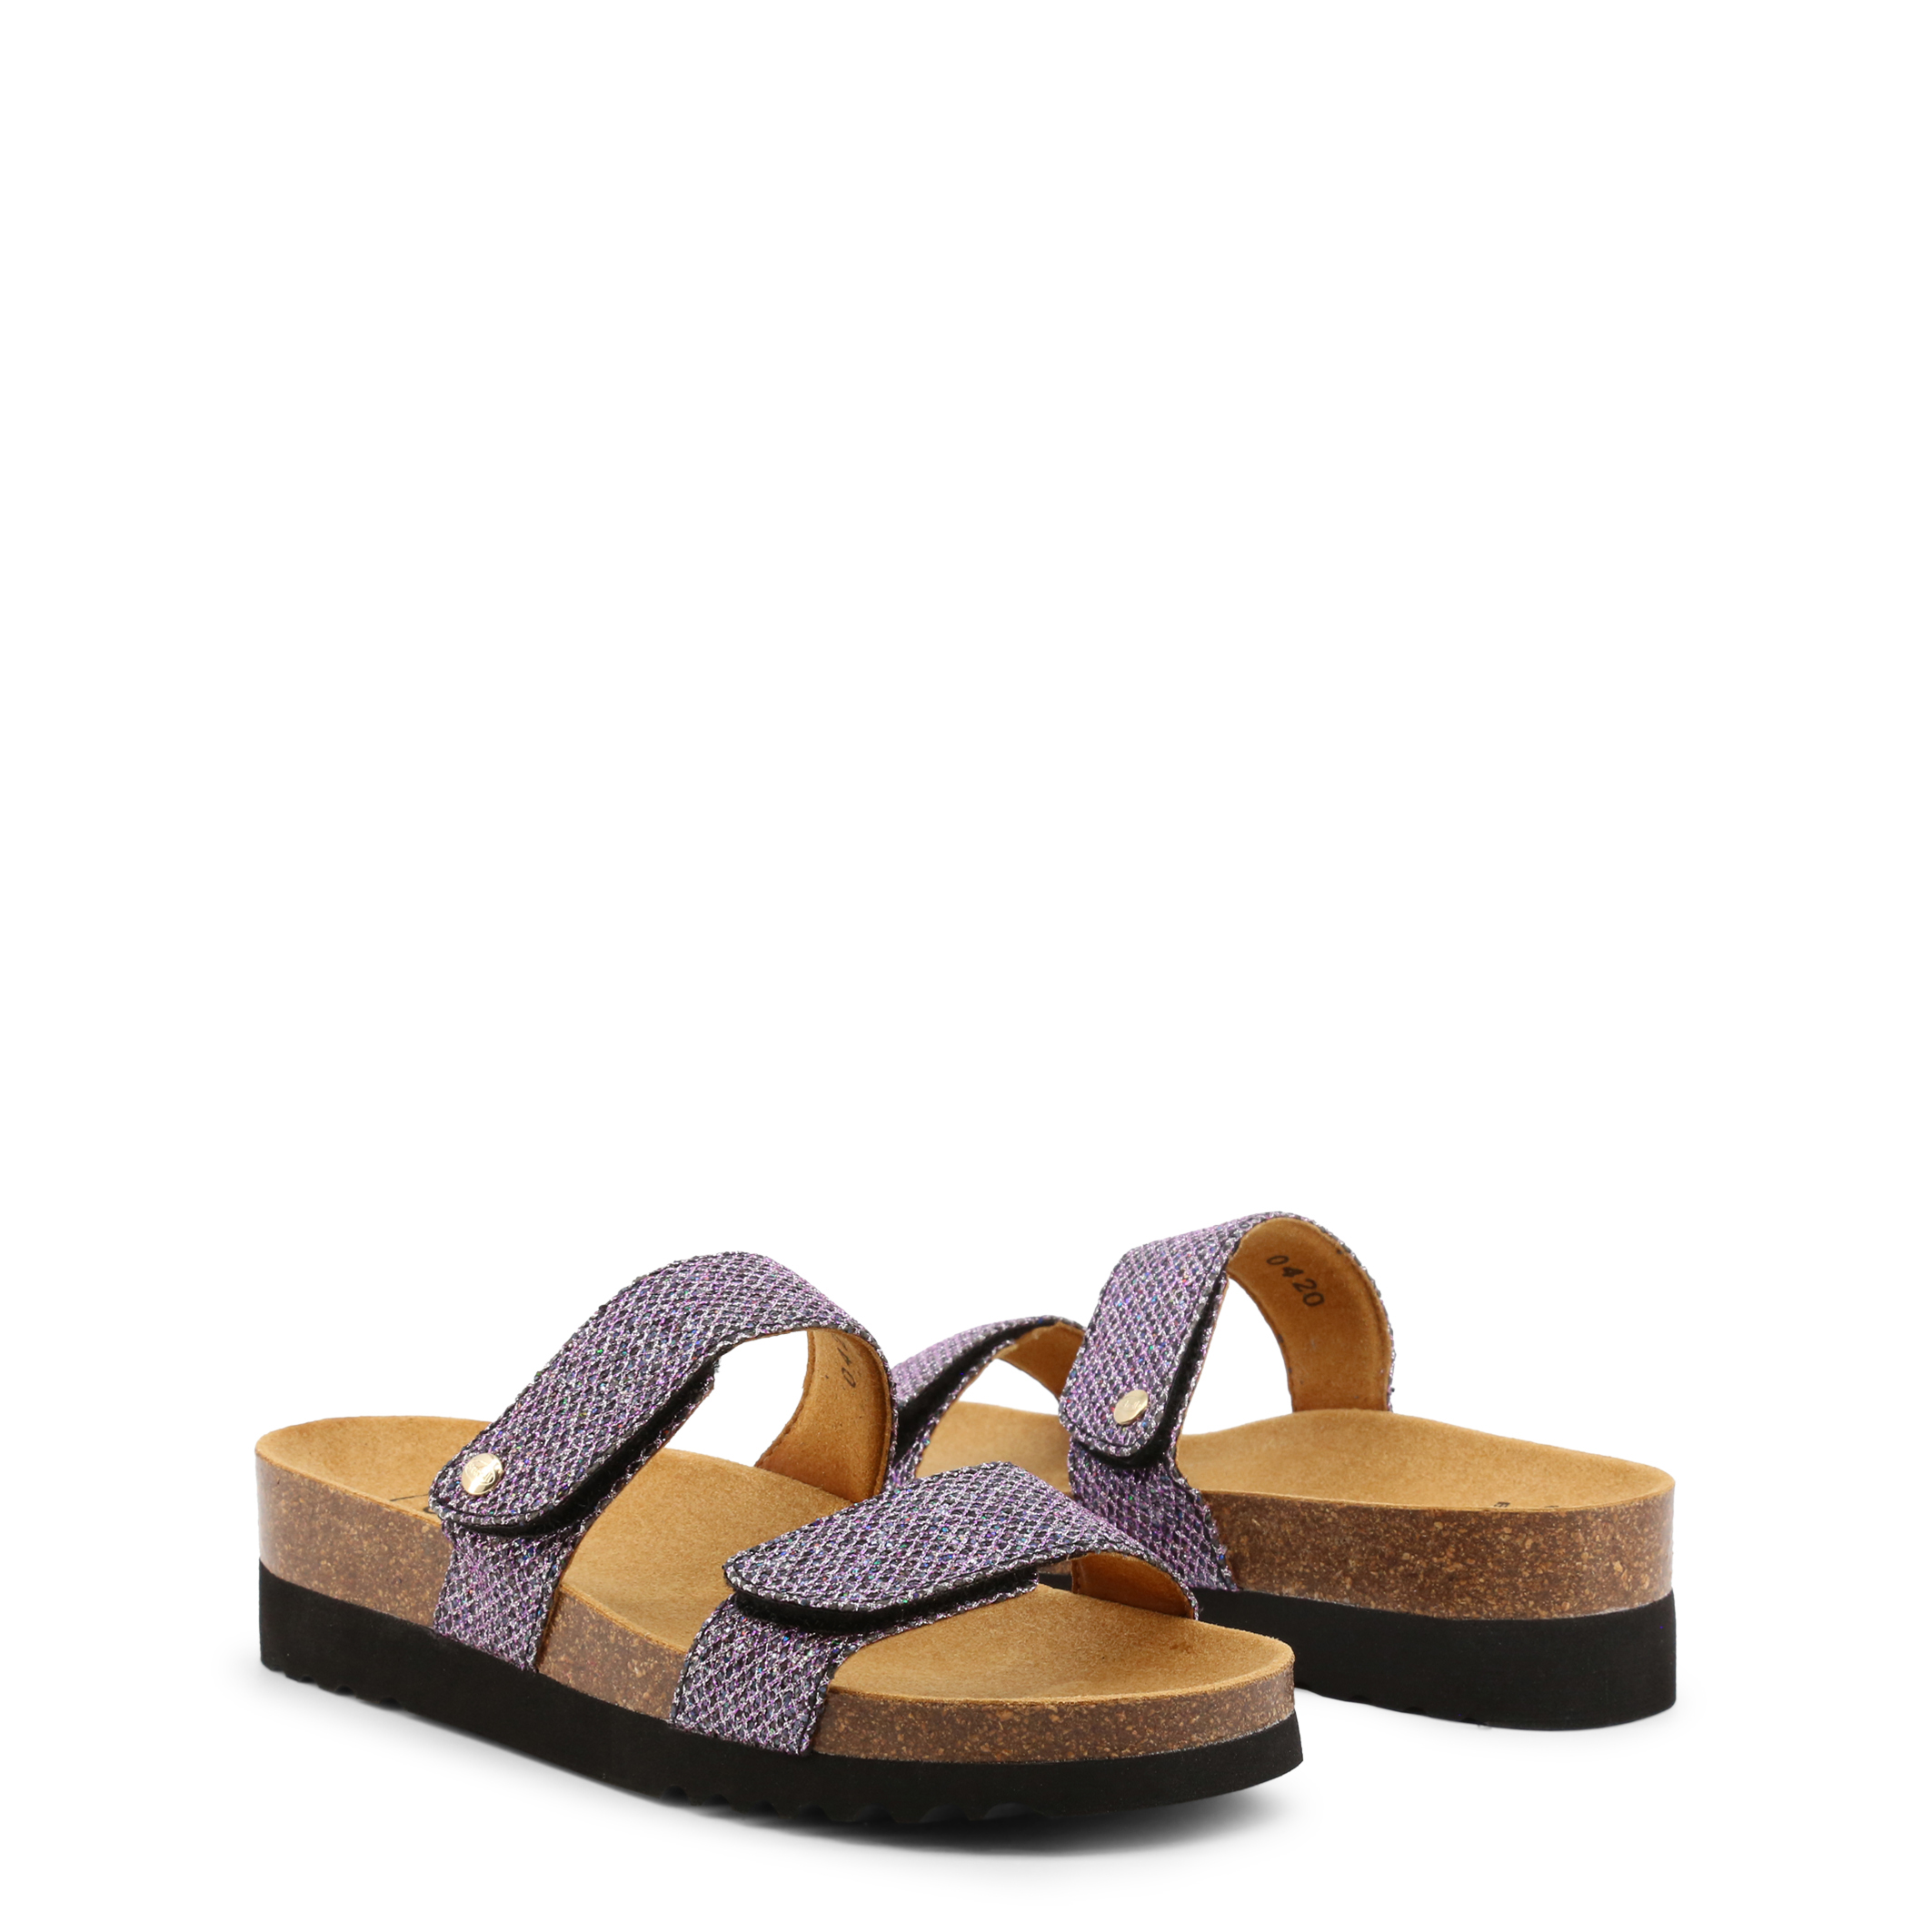 Dr Scholl purple Flip Flops for Women - LUSAKA-F27749